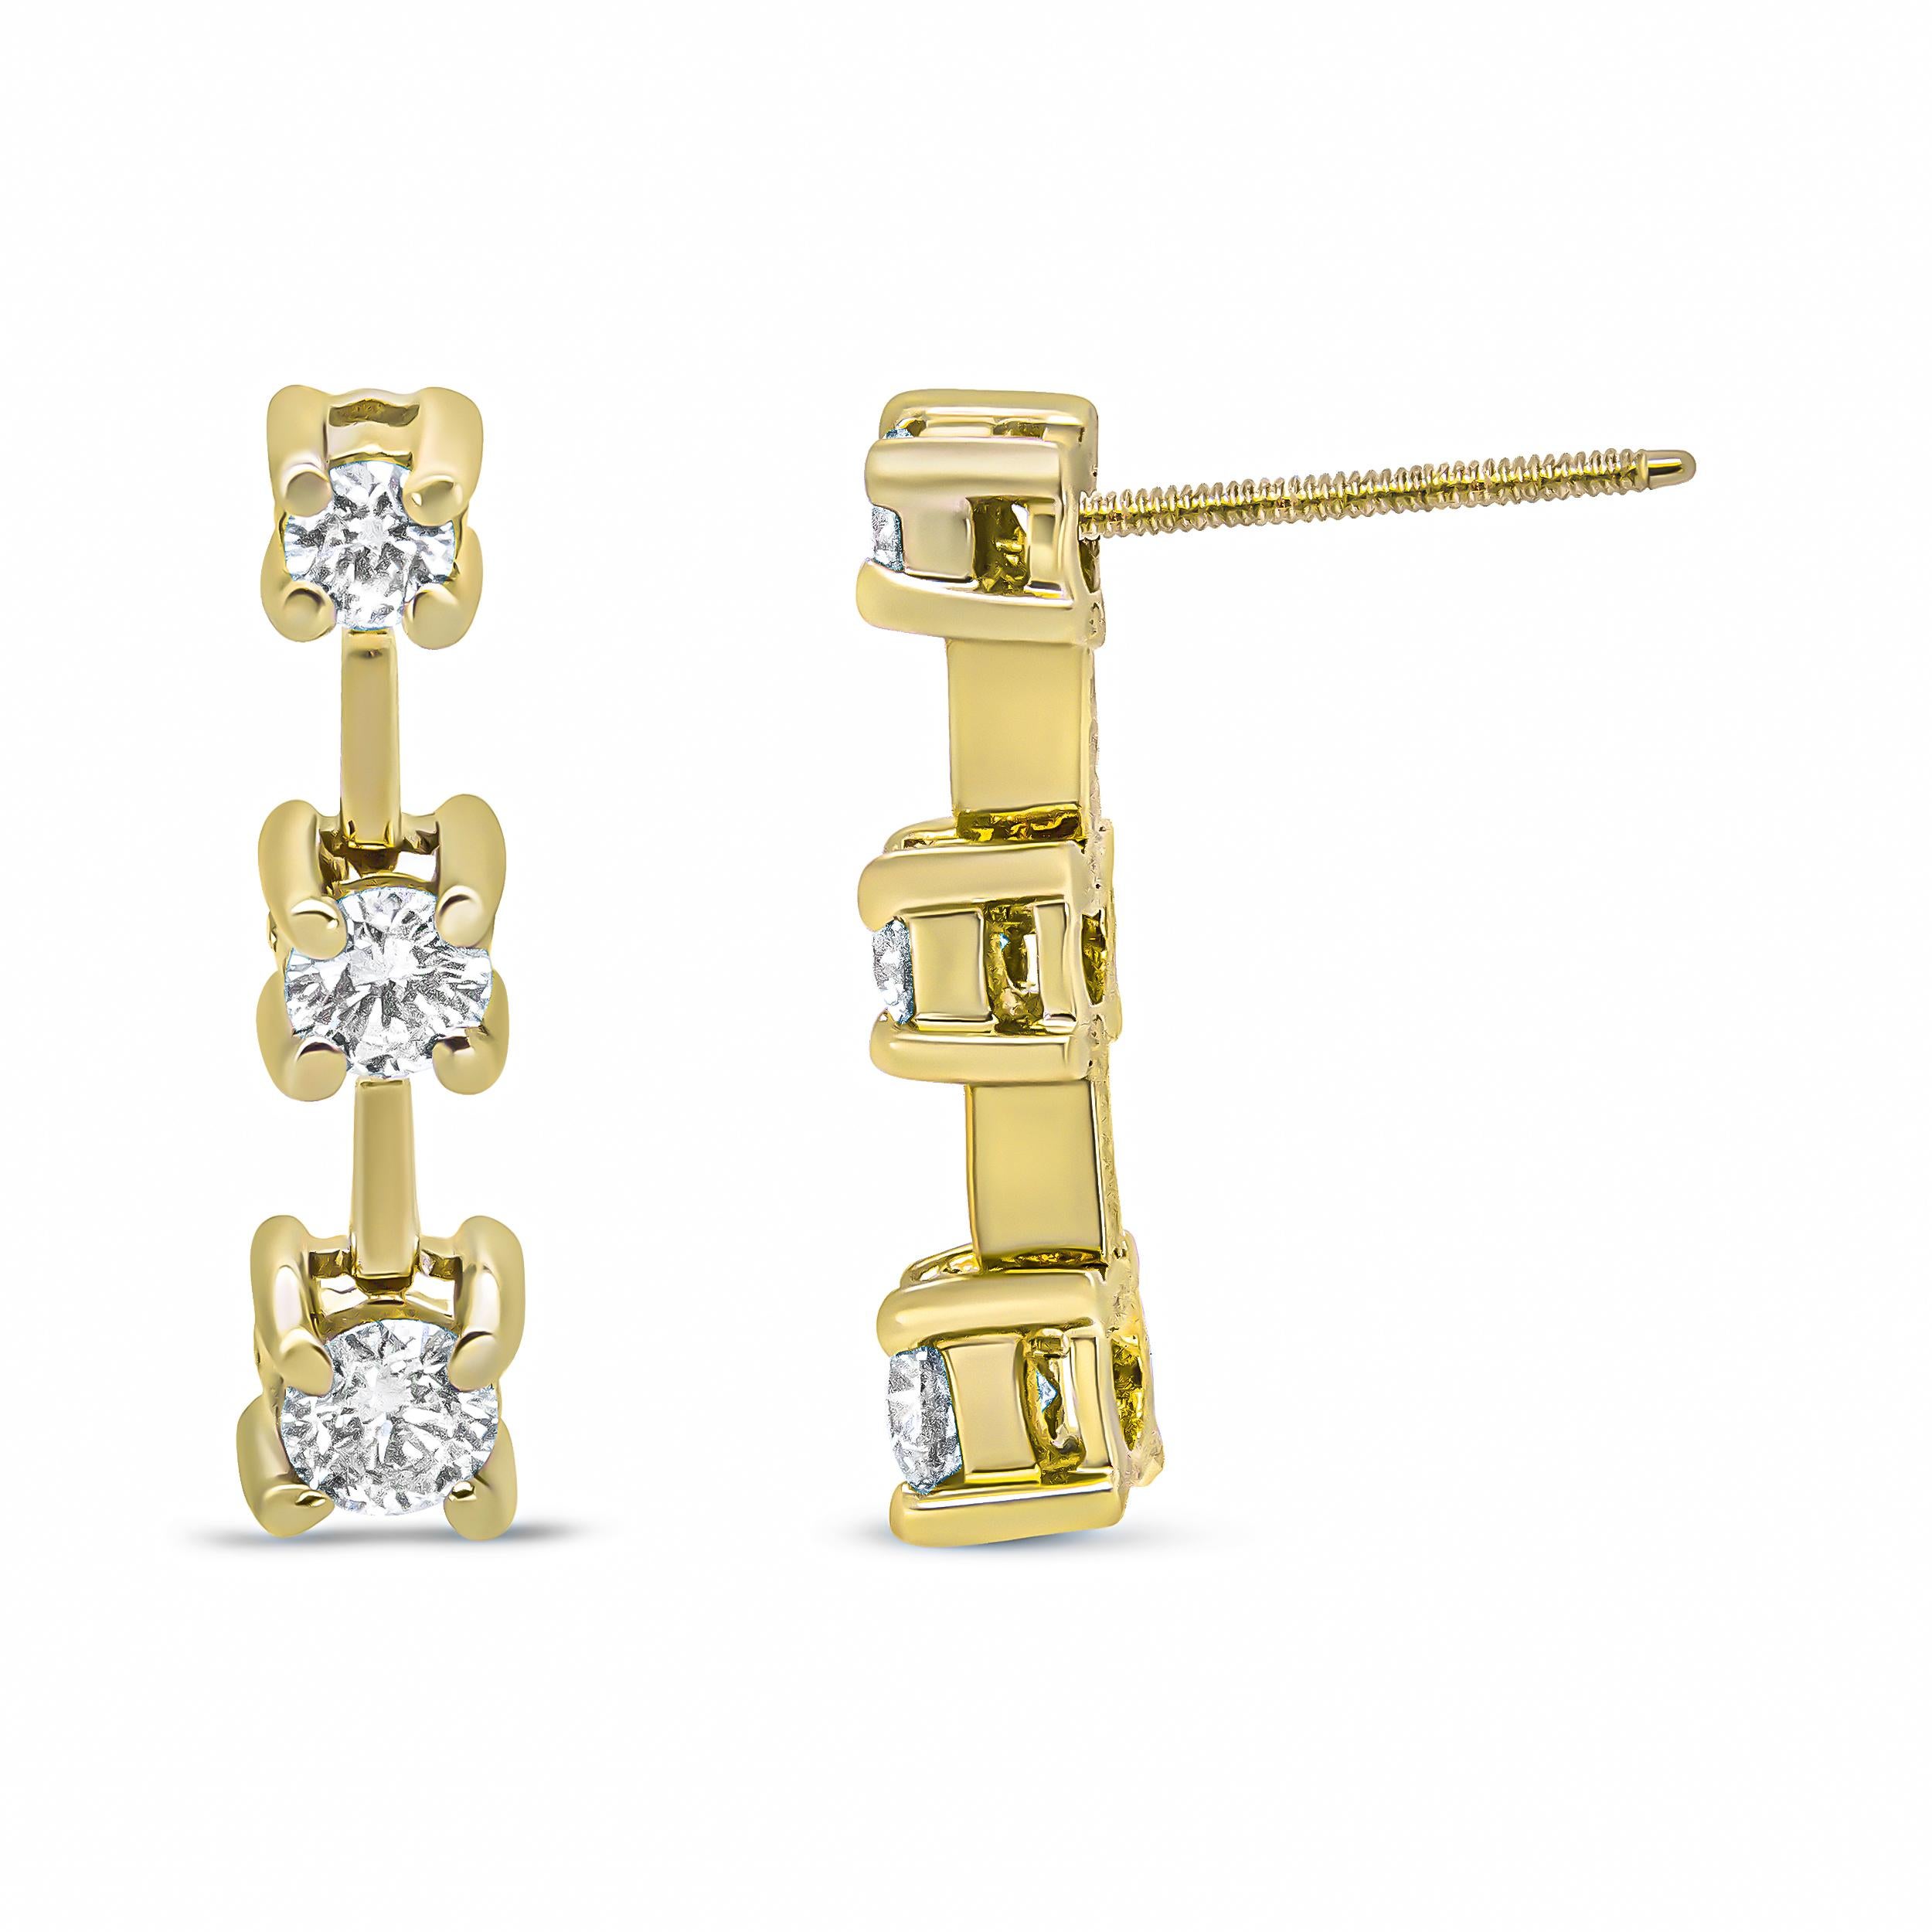 3/4 carat diamond earrings